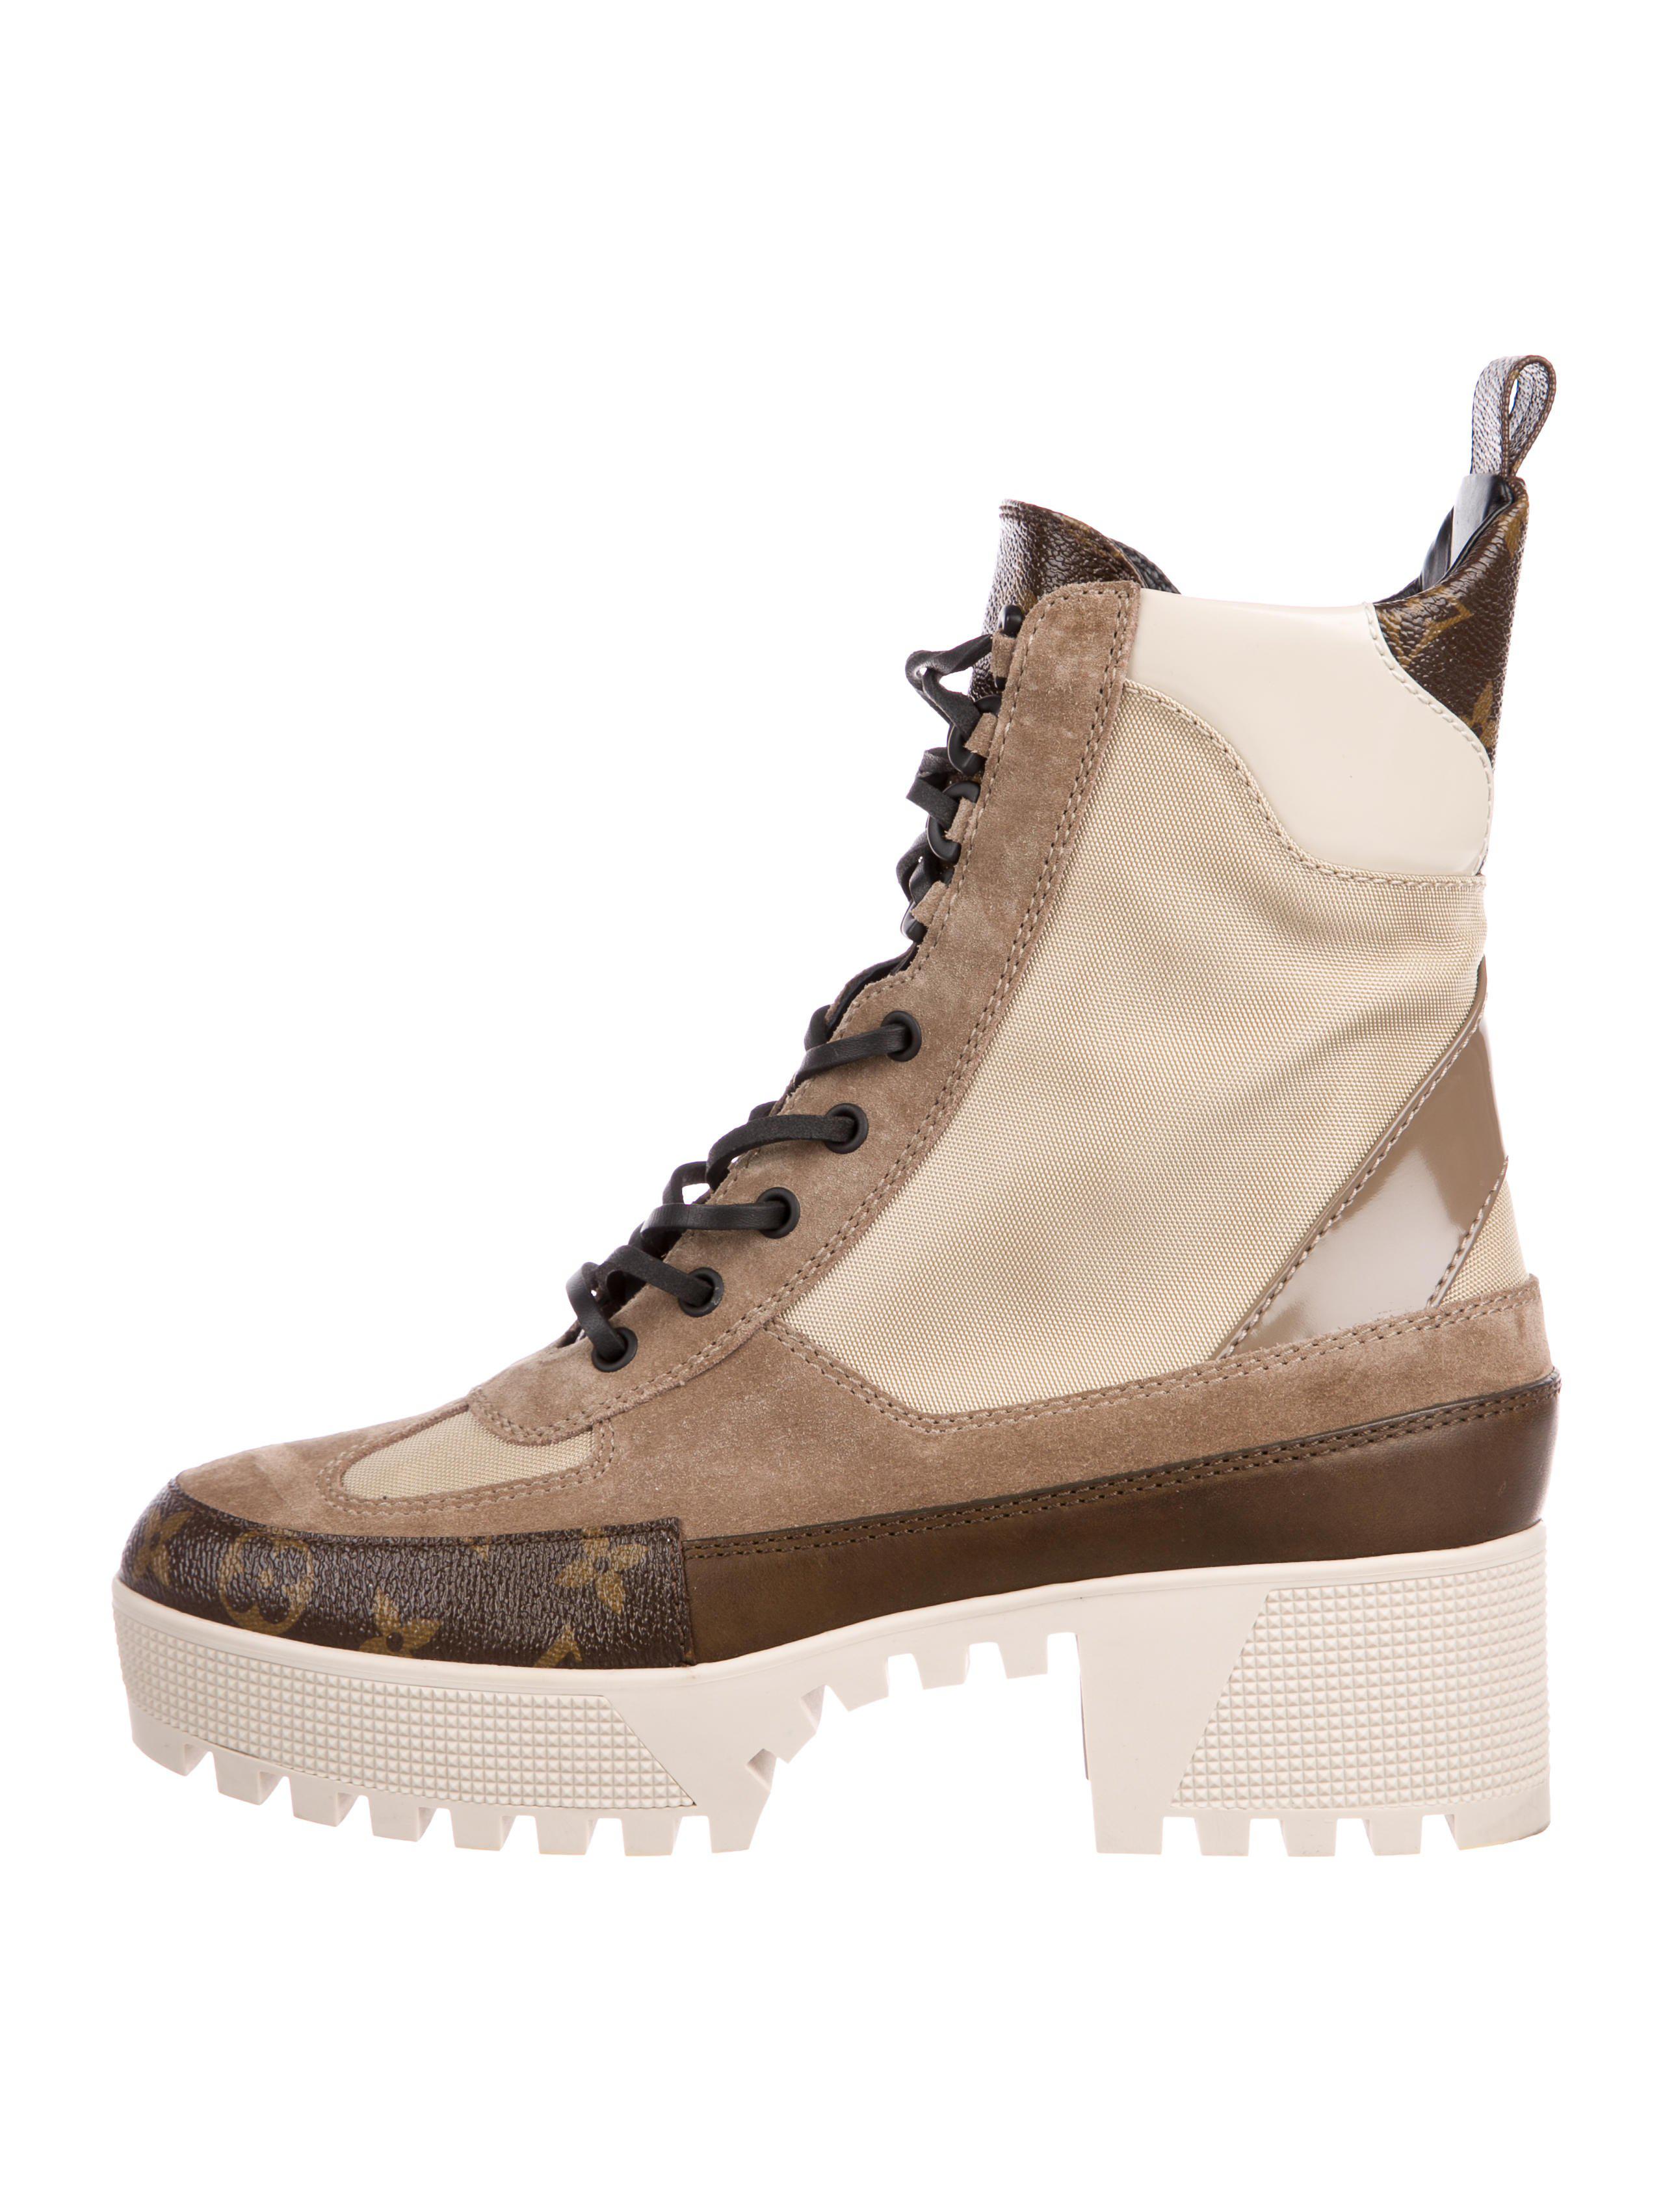 Lyst - Louis Vuitton 2016 Laureate Platform Desert Boots Brown in Natural